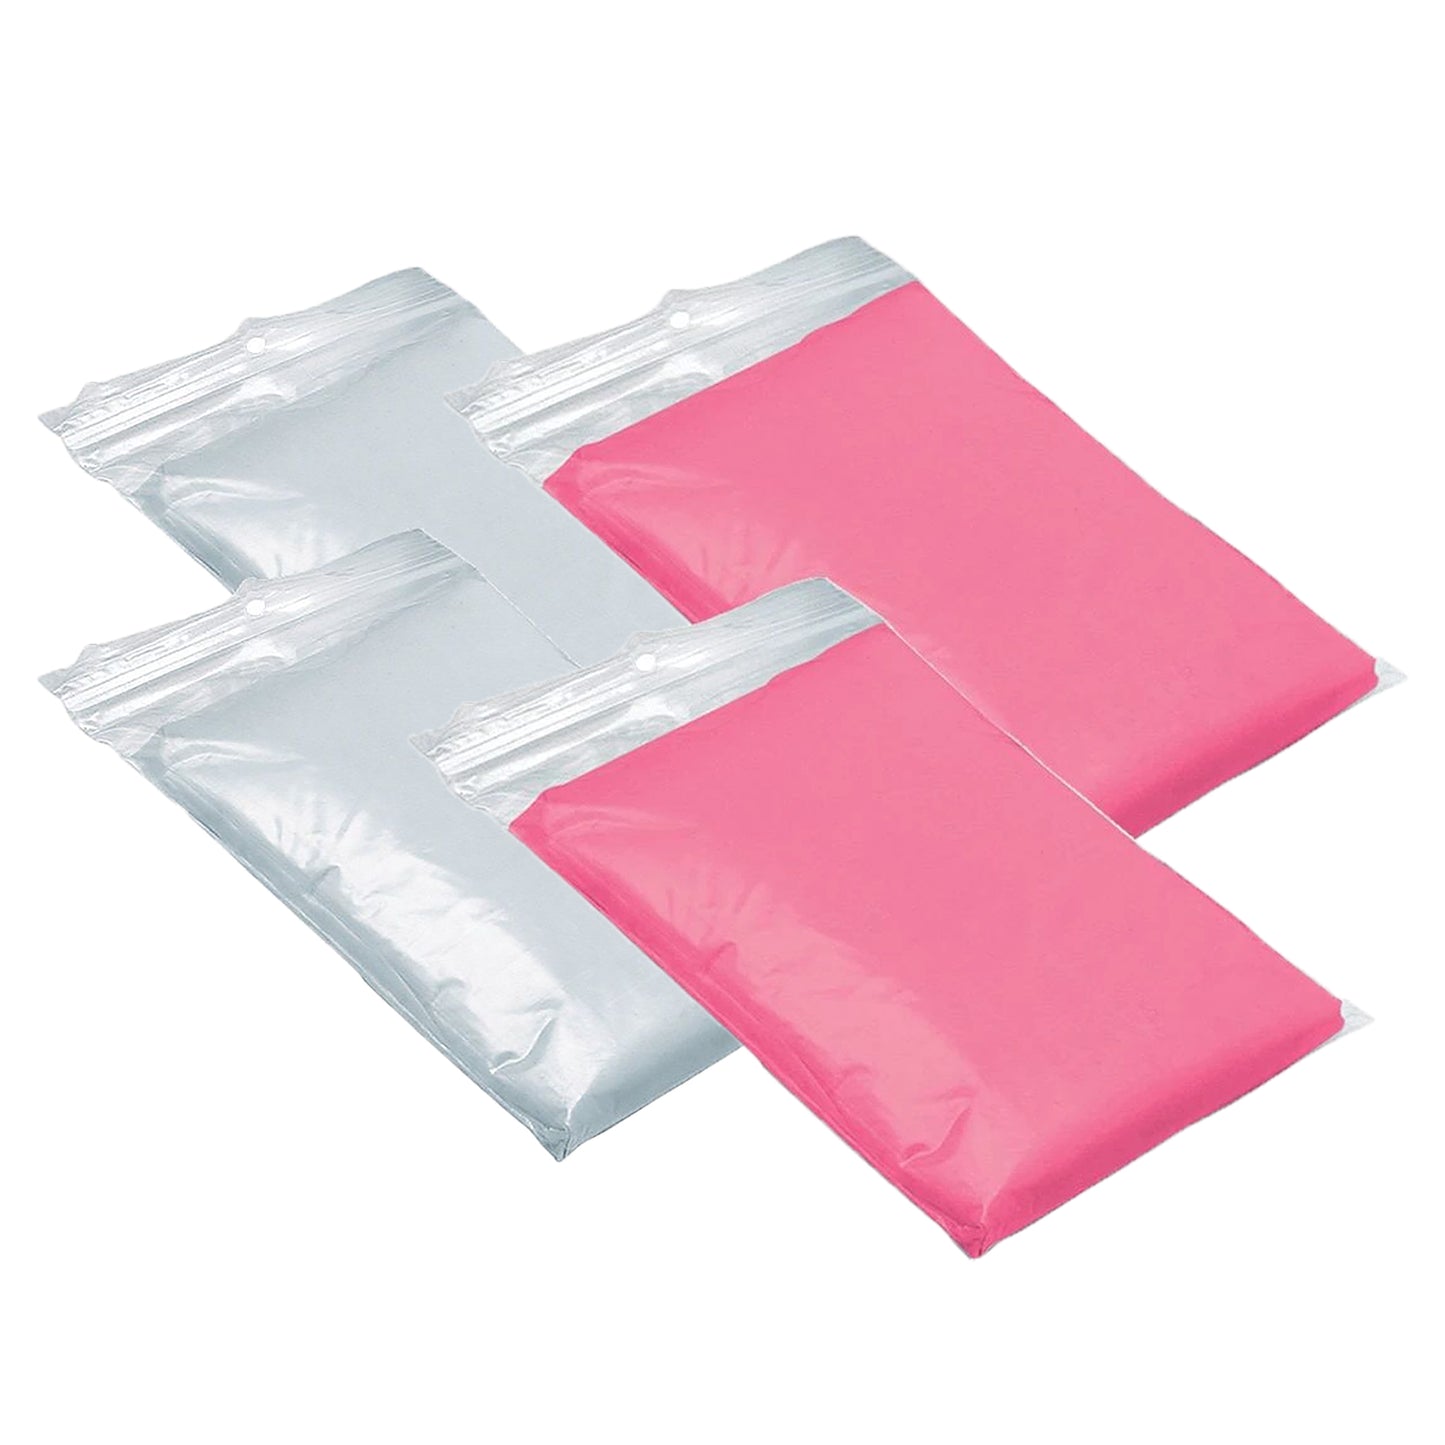 2x Clear 2x Pink Adult Size Waterproof Hooded Theme Park Rain Poncho Mac Coat